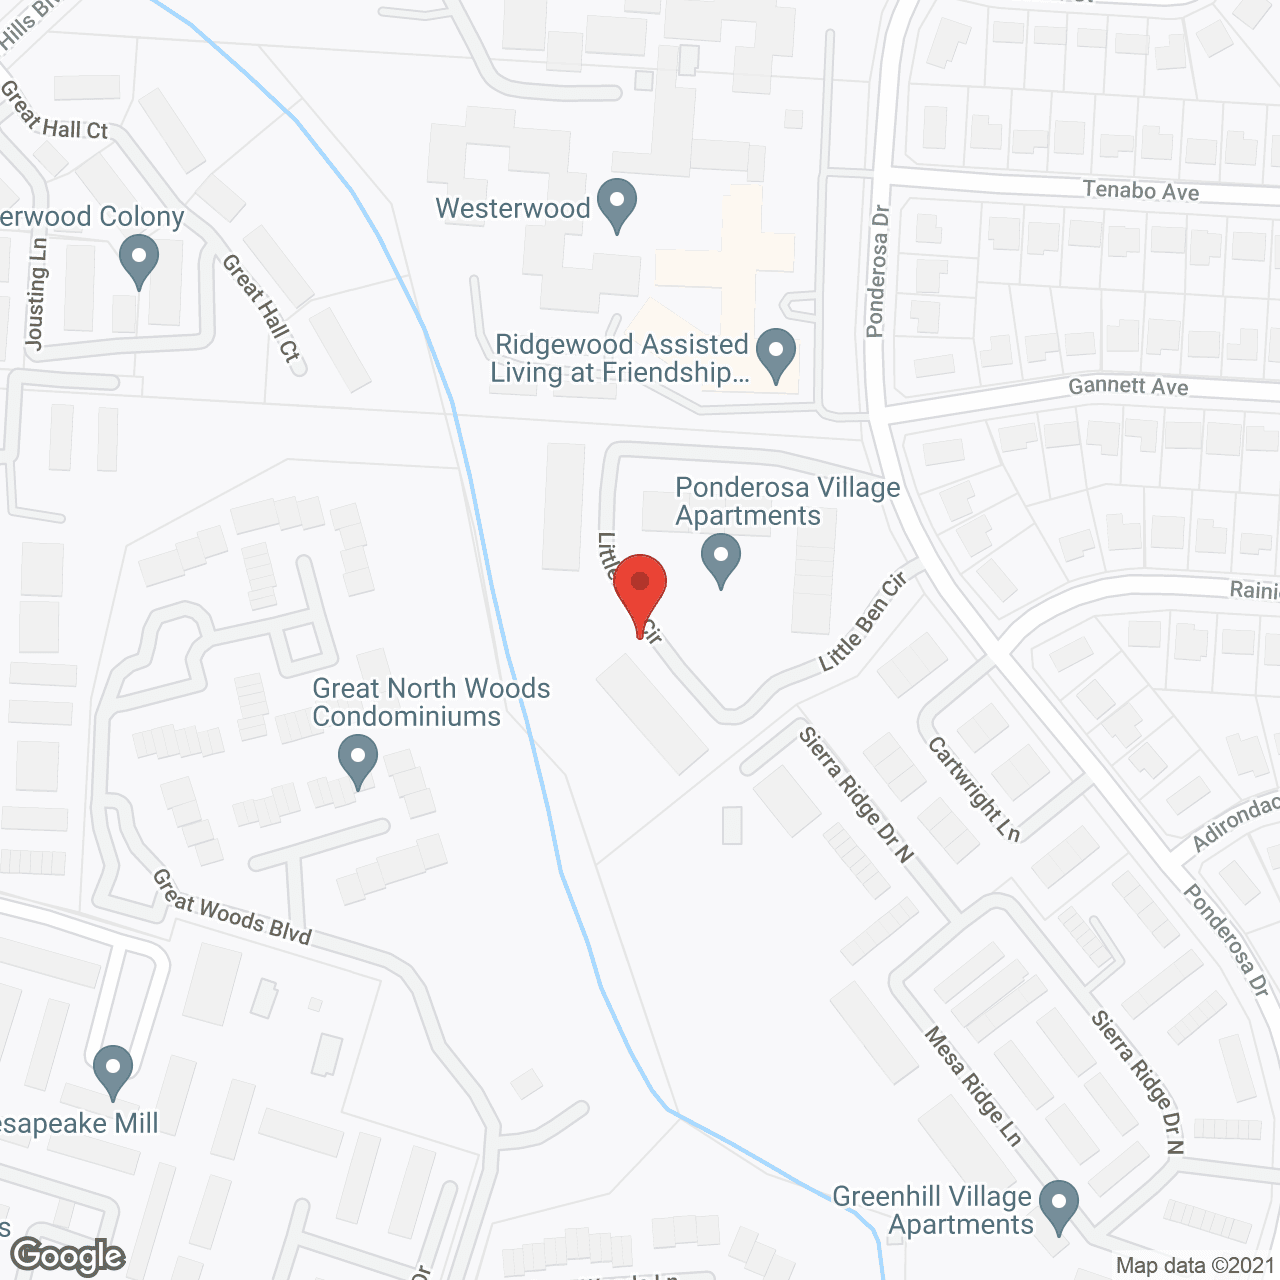 Ponderosa Village in google map